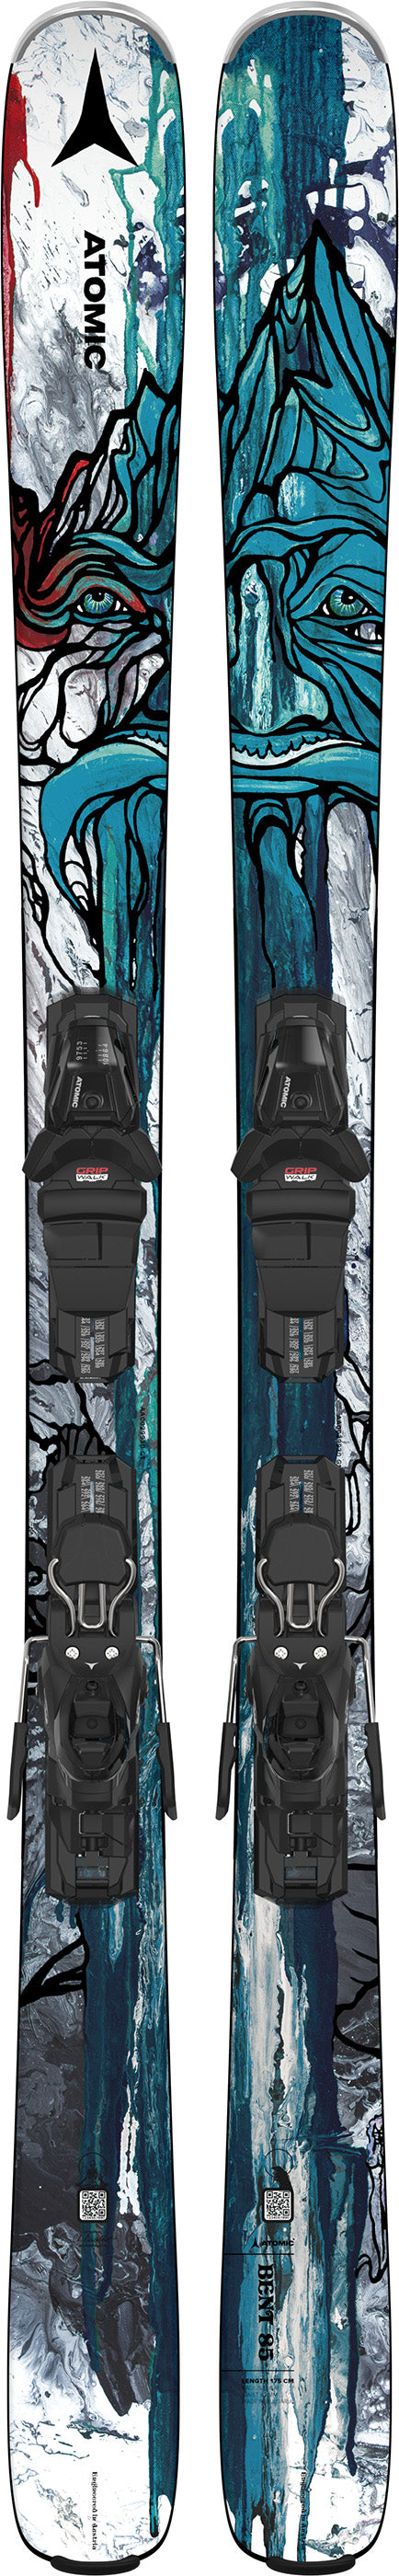 Pack neuf skis Atomic BENT 85 grey + fixations M10 GW - neuf déstockage